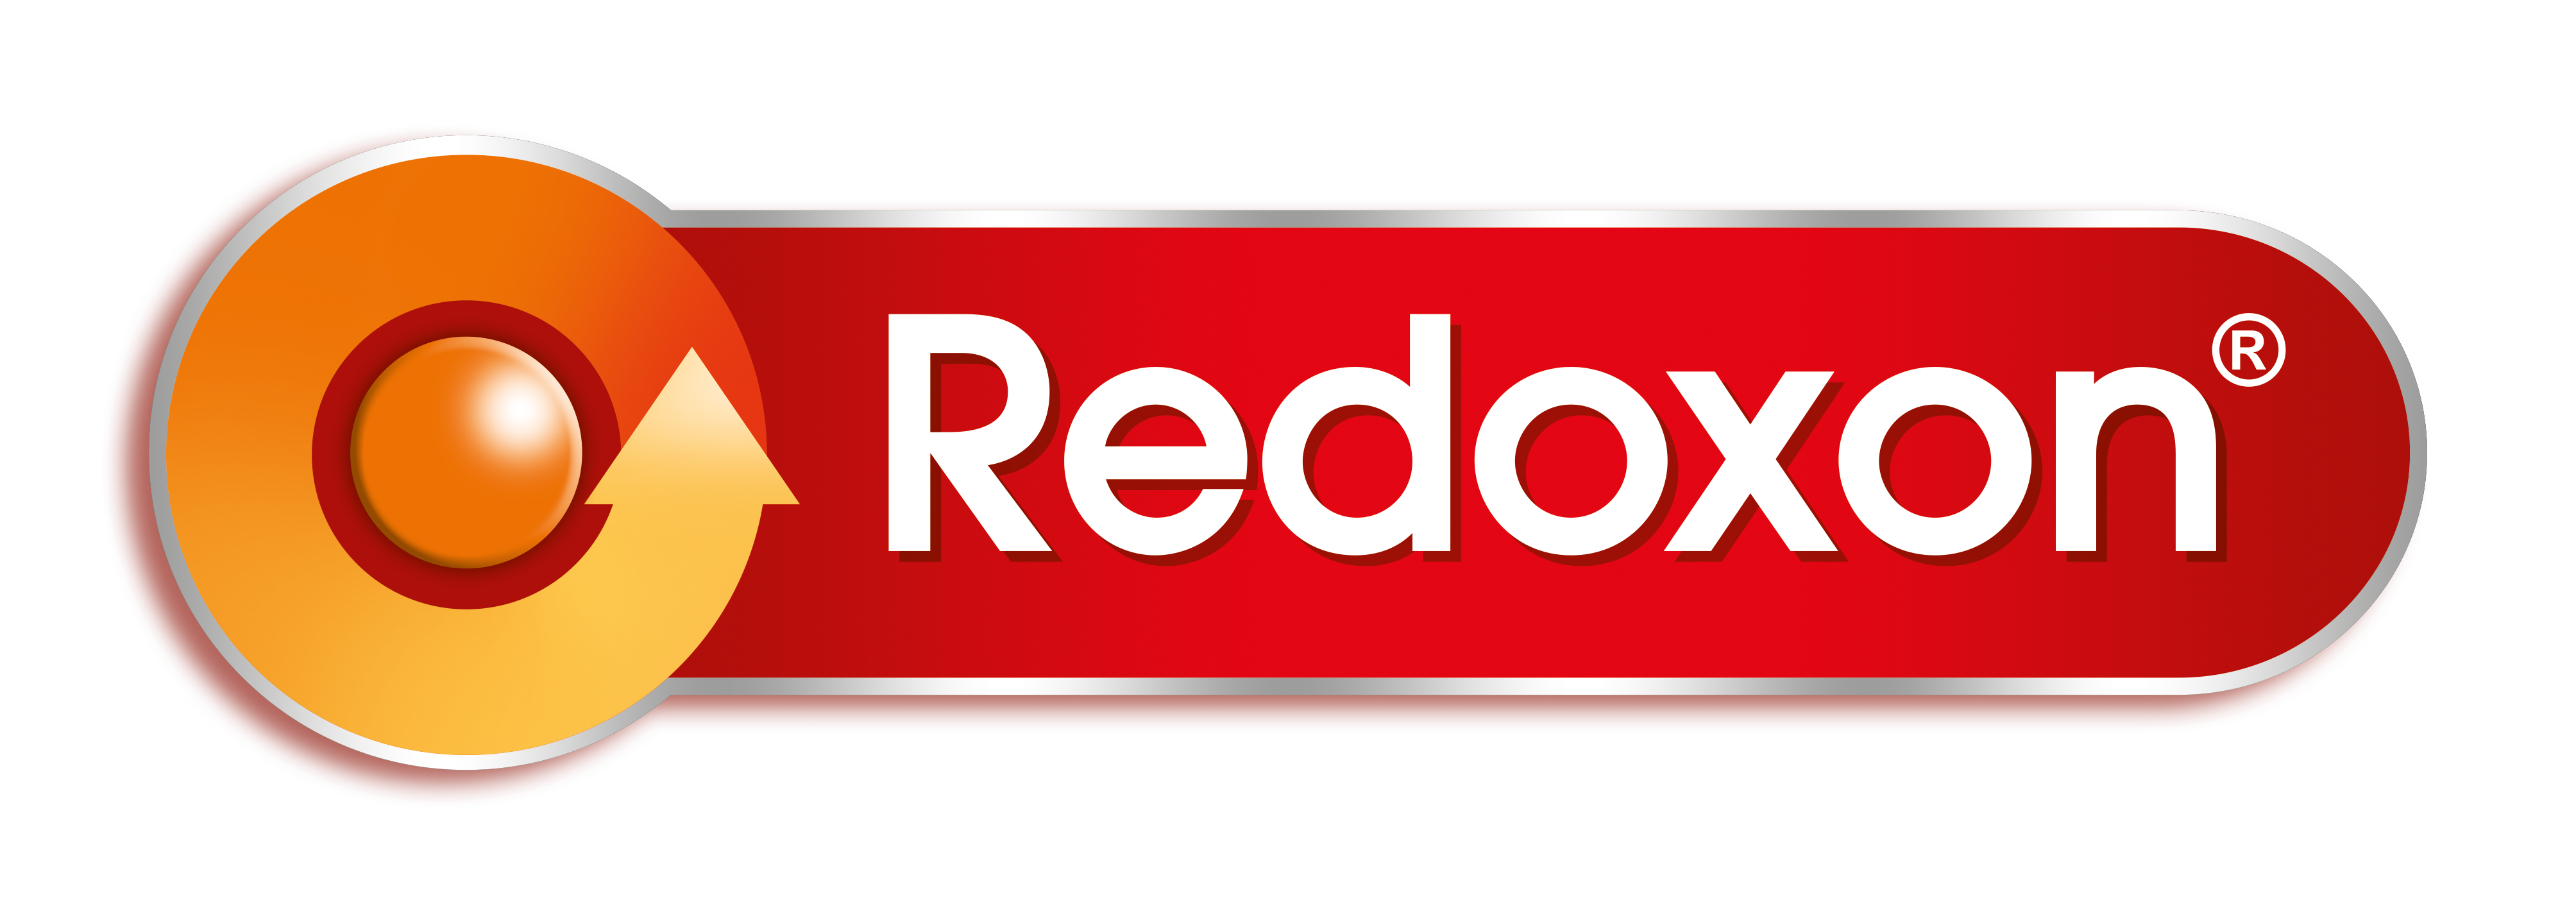 2018 REDOXON logo.png